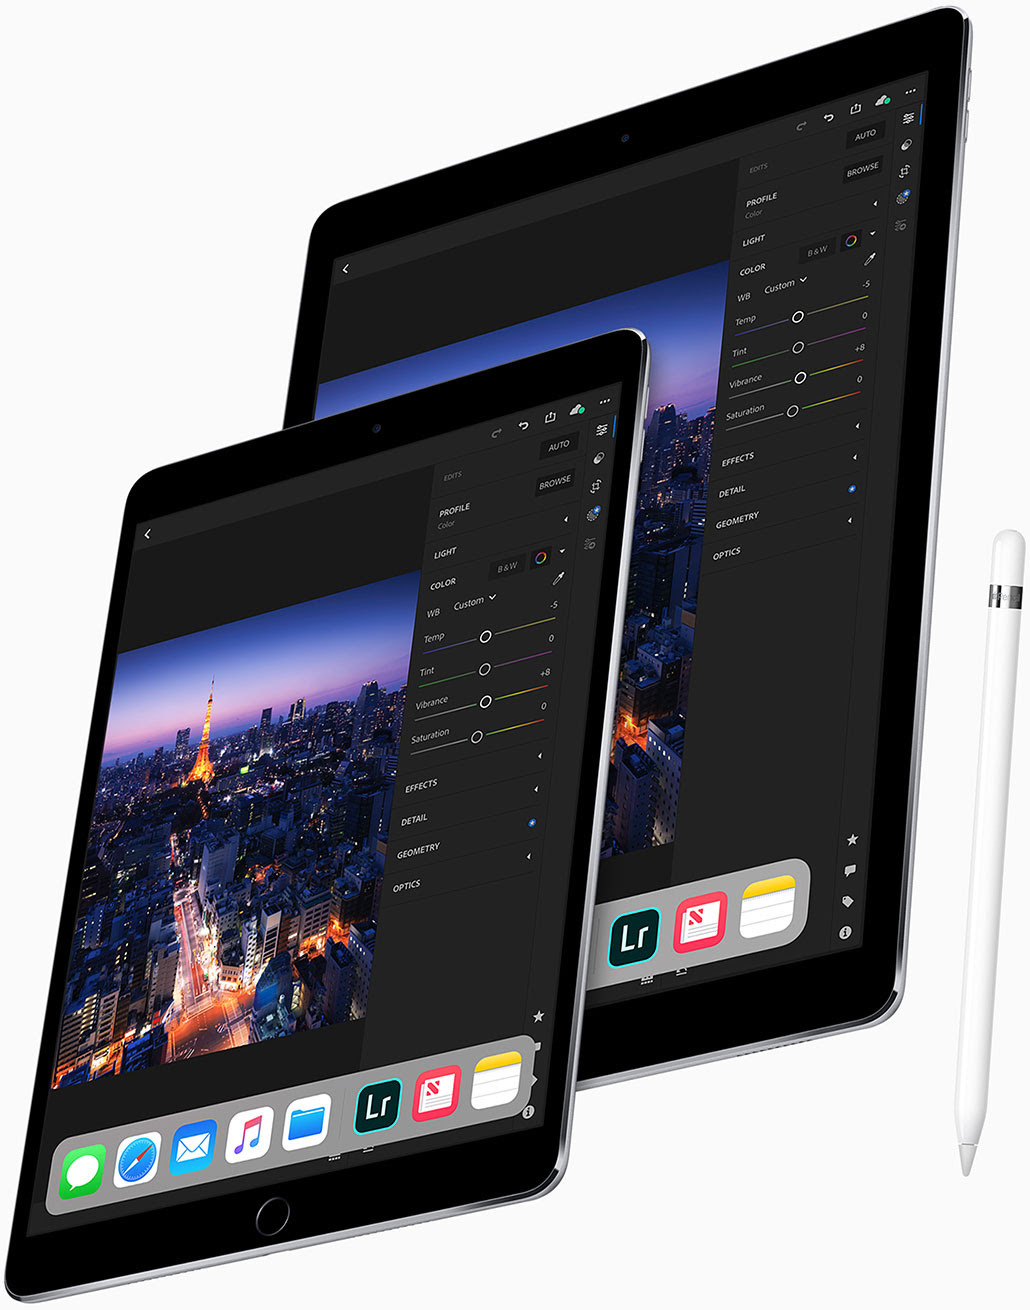 Apple macbook pro tablets lemfo dm12